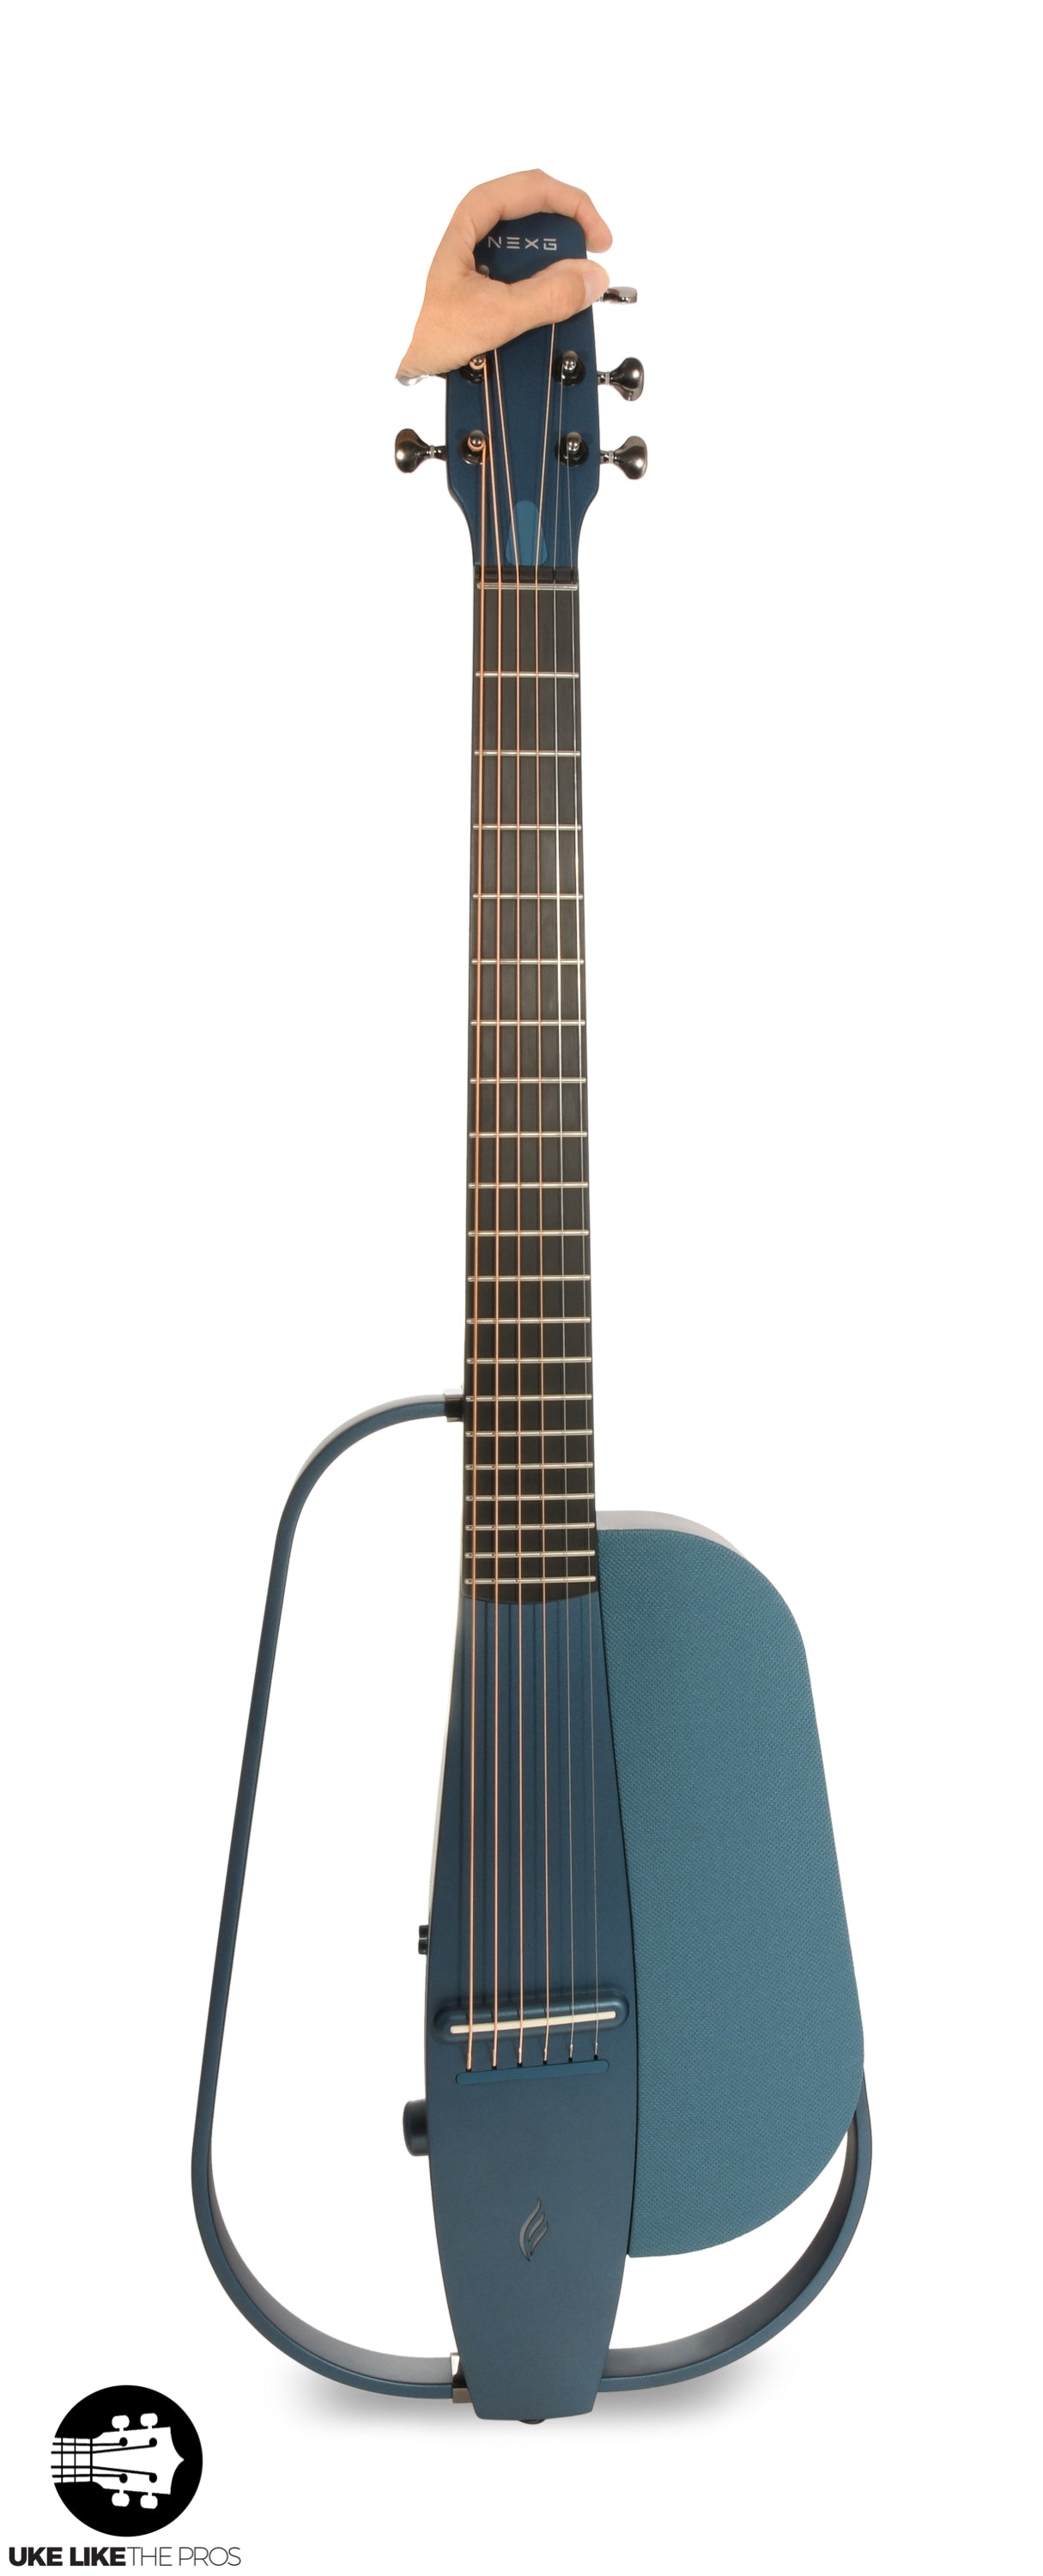 Enya NEX-G Smart Audio Guitar Blue "Walley"